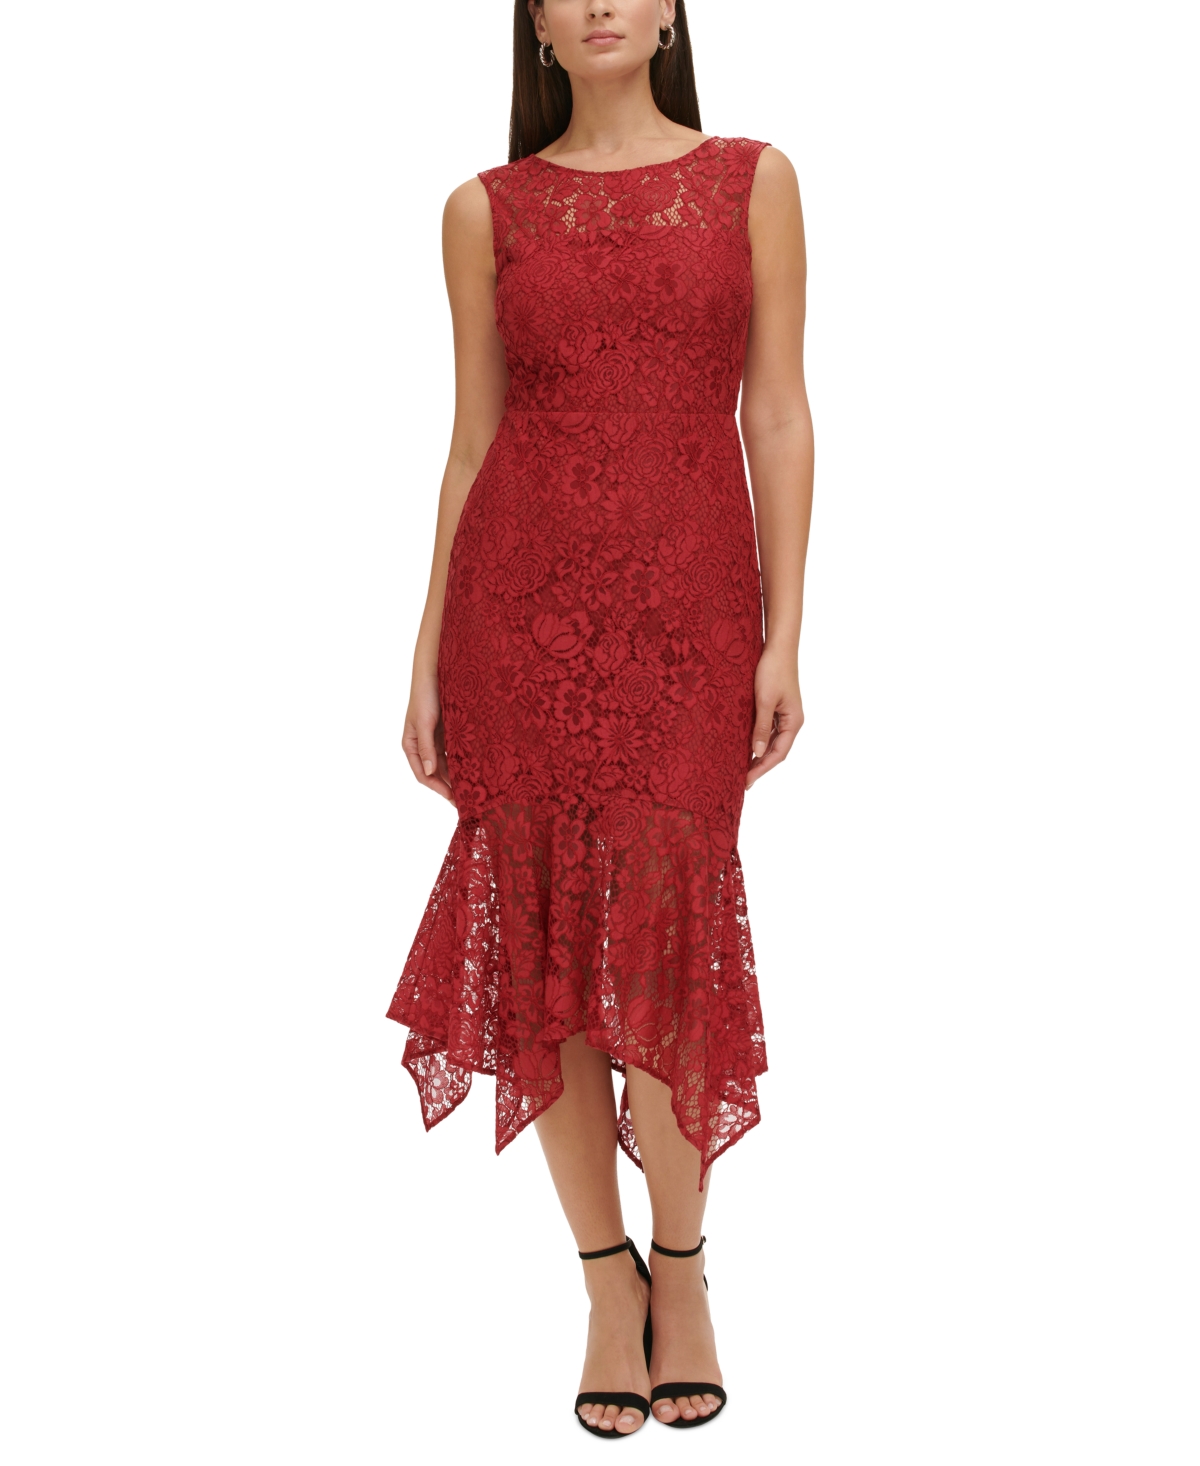 Great Gatsby Dress – Great Gatsby Dresses for Sale kensie Womens Floral Lace Handkerchief-Hem Midi Dress - Burgundy $63.99 AT vintagedancer.com